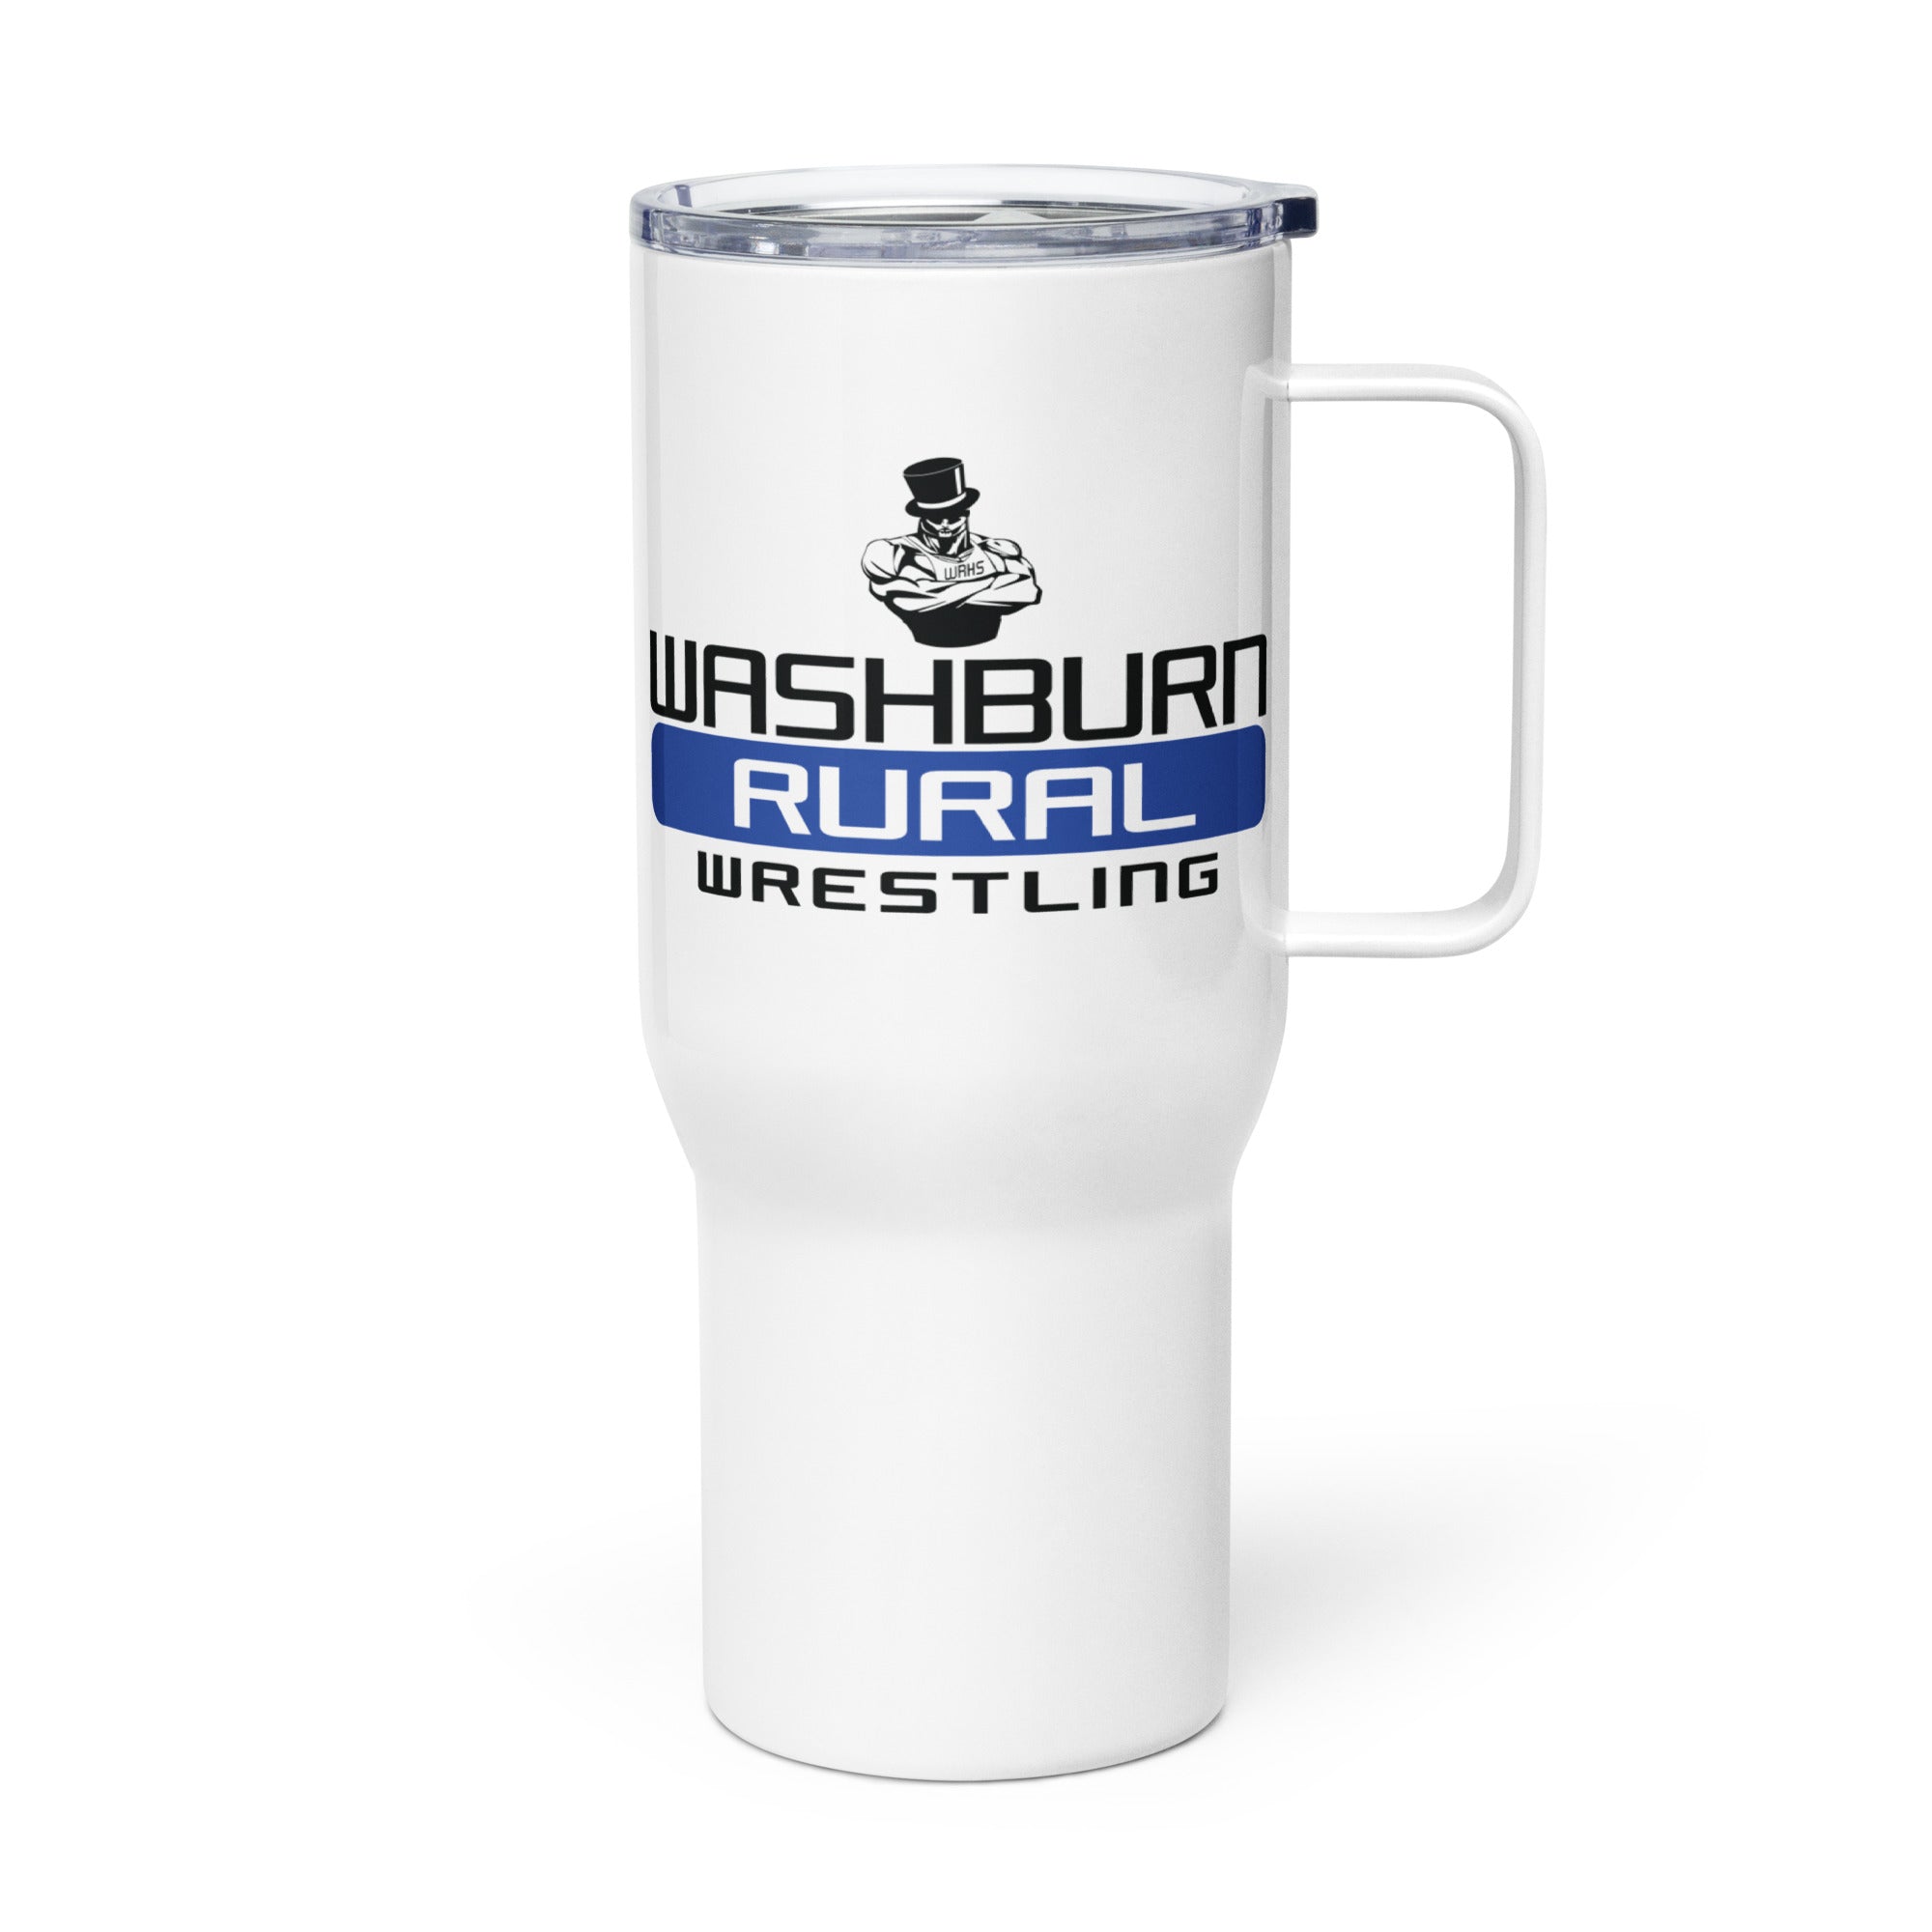 Washburn Rural Wrestling Travel mug with a handle